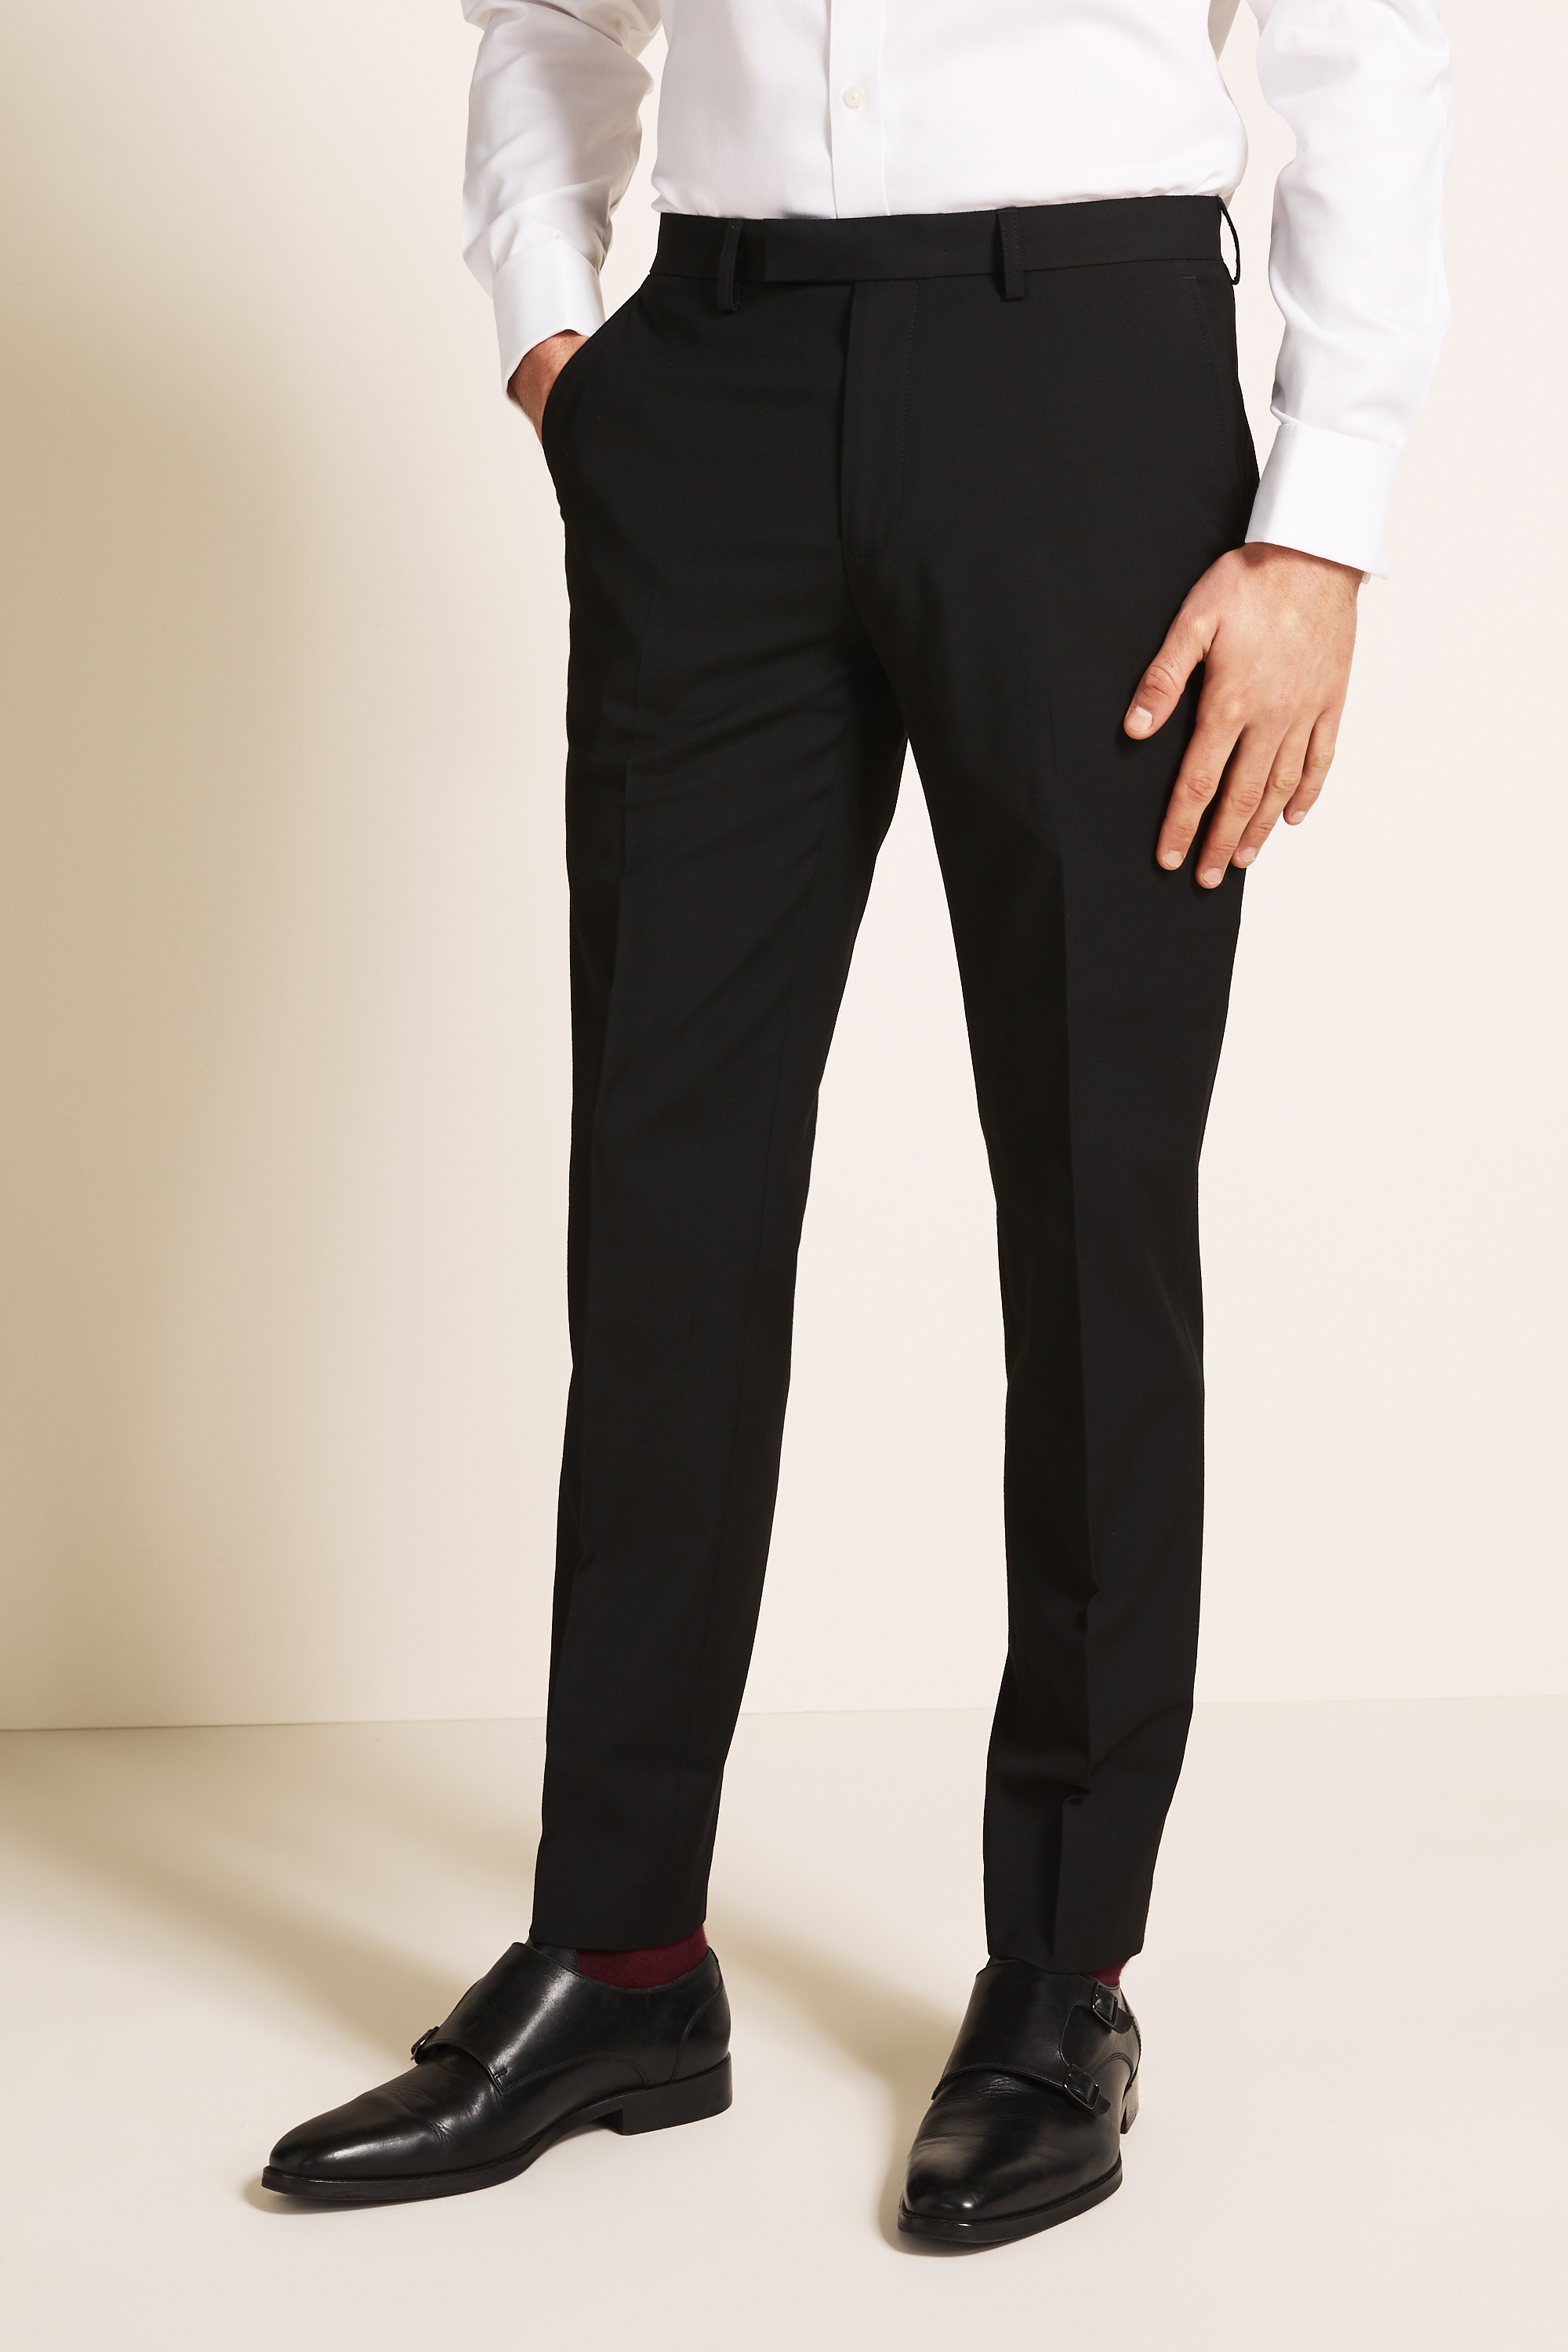 Buy ColorPlus Black Tailored Fit Trousers for Men Online  Tata CLiQ